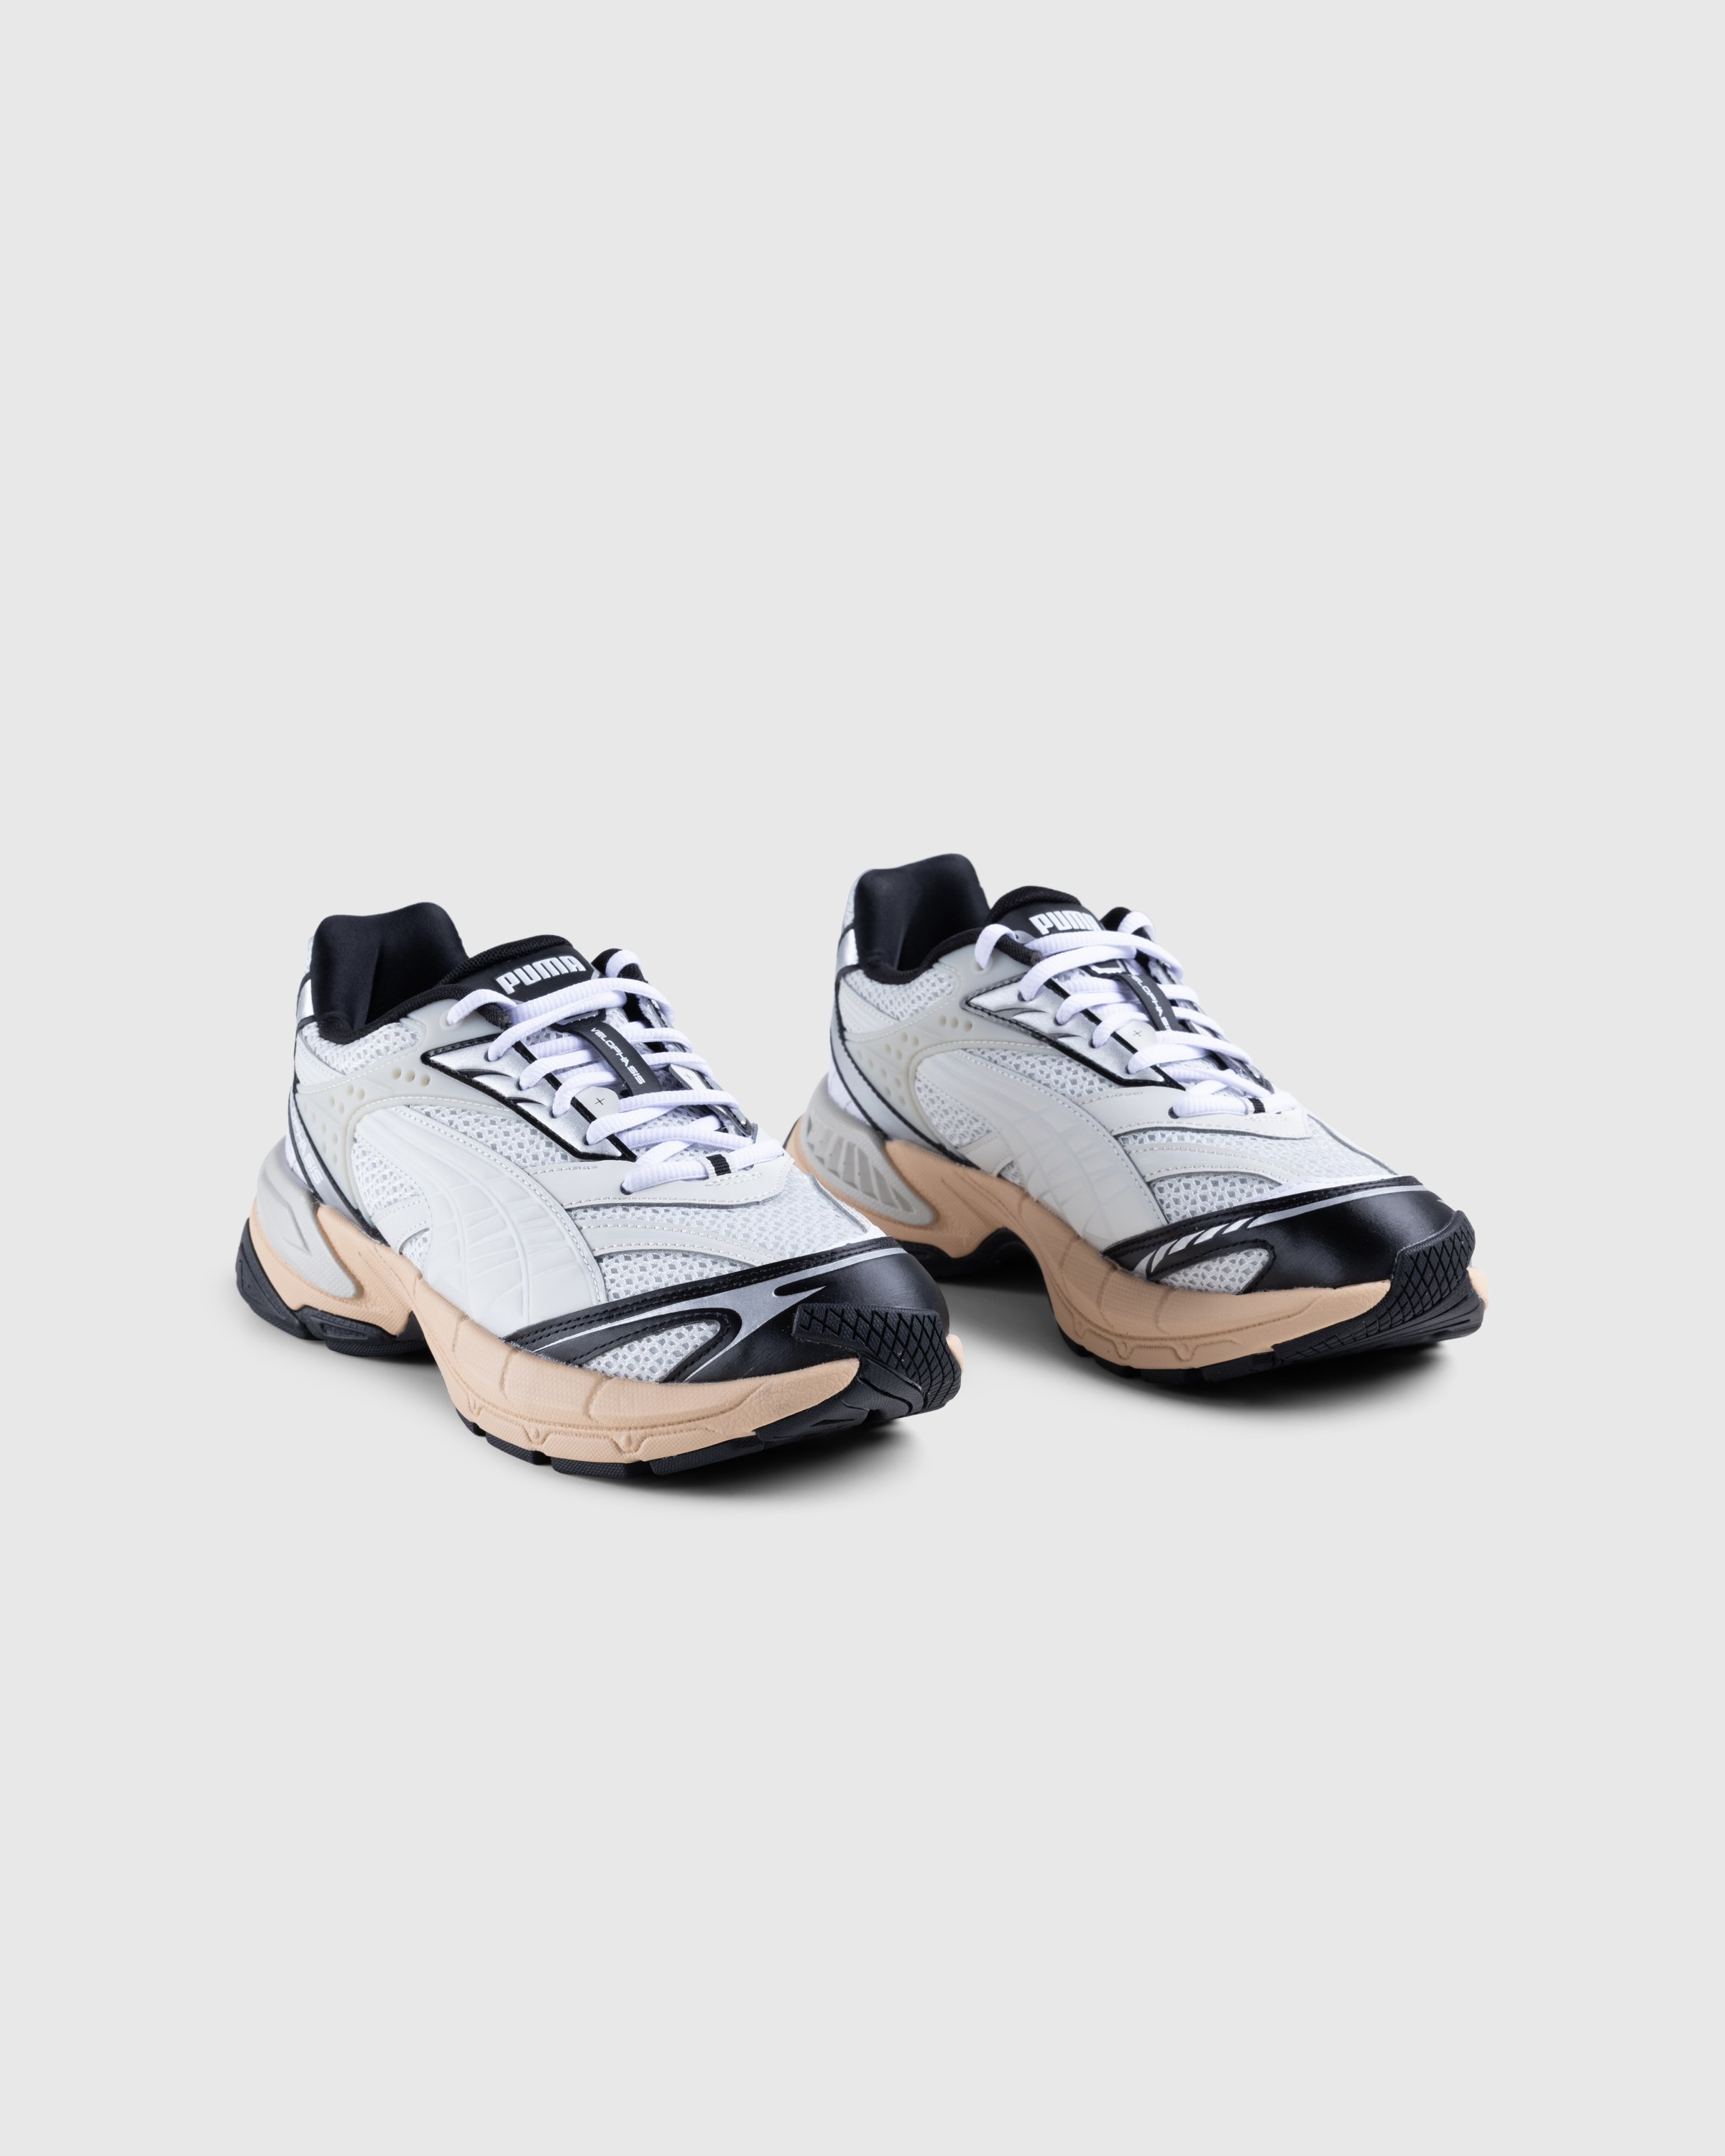 Puma - Velophasis Technisch Sedate Grey/Cashew - Footwear - Multi - Image 3